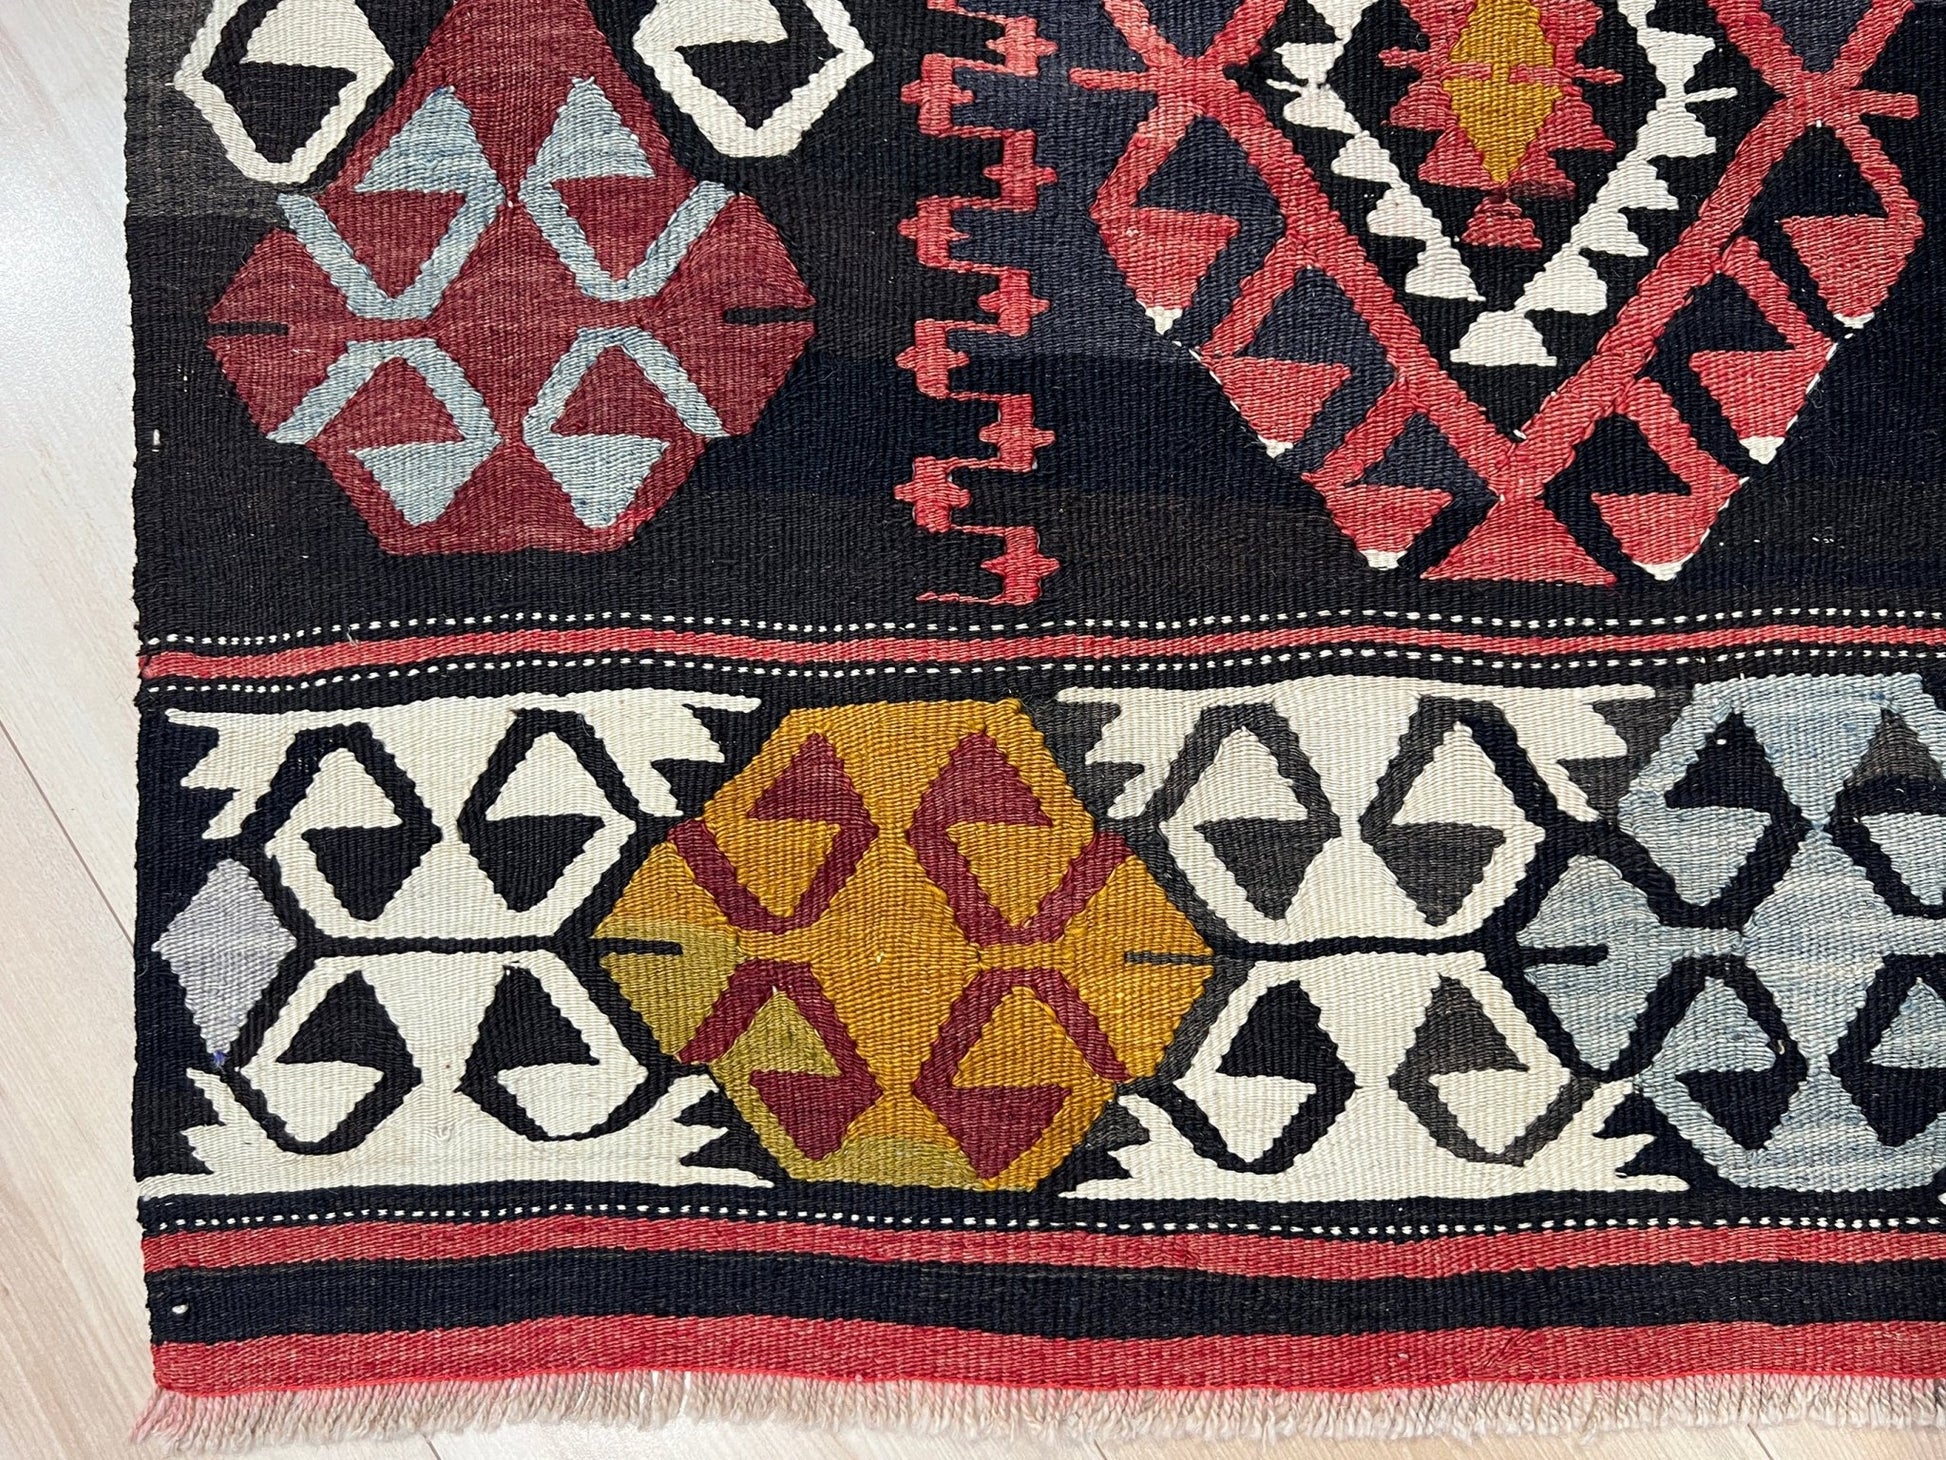 karakecili vintage turkish kilim rug shop san francisco bay area. Buy handmade flatweave rug. Bohemian style home decor.